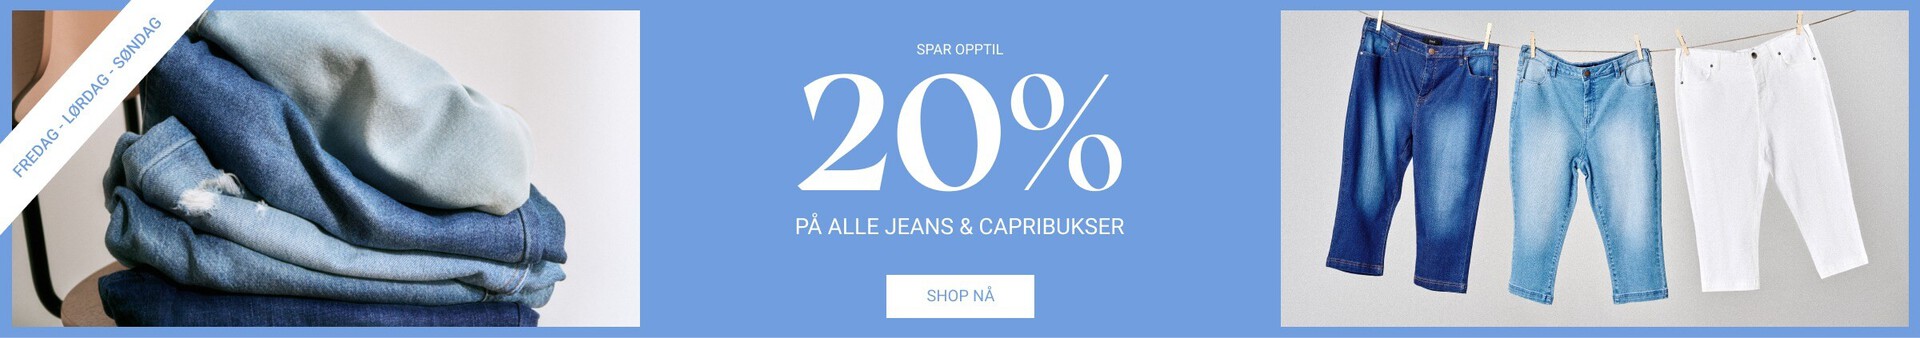 20% på alle jeans og strikkevarer - Zizzi